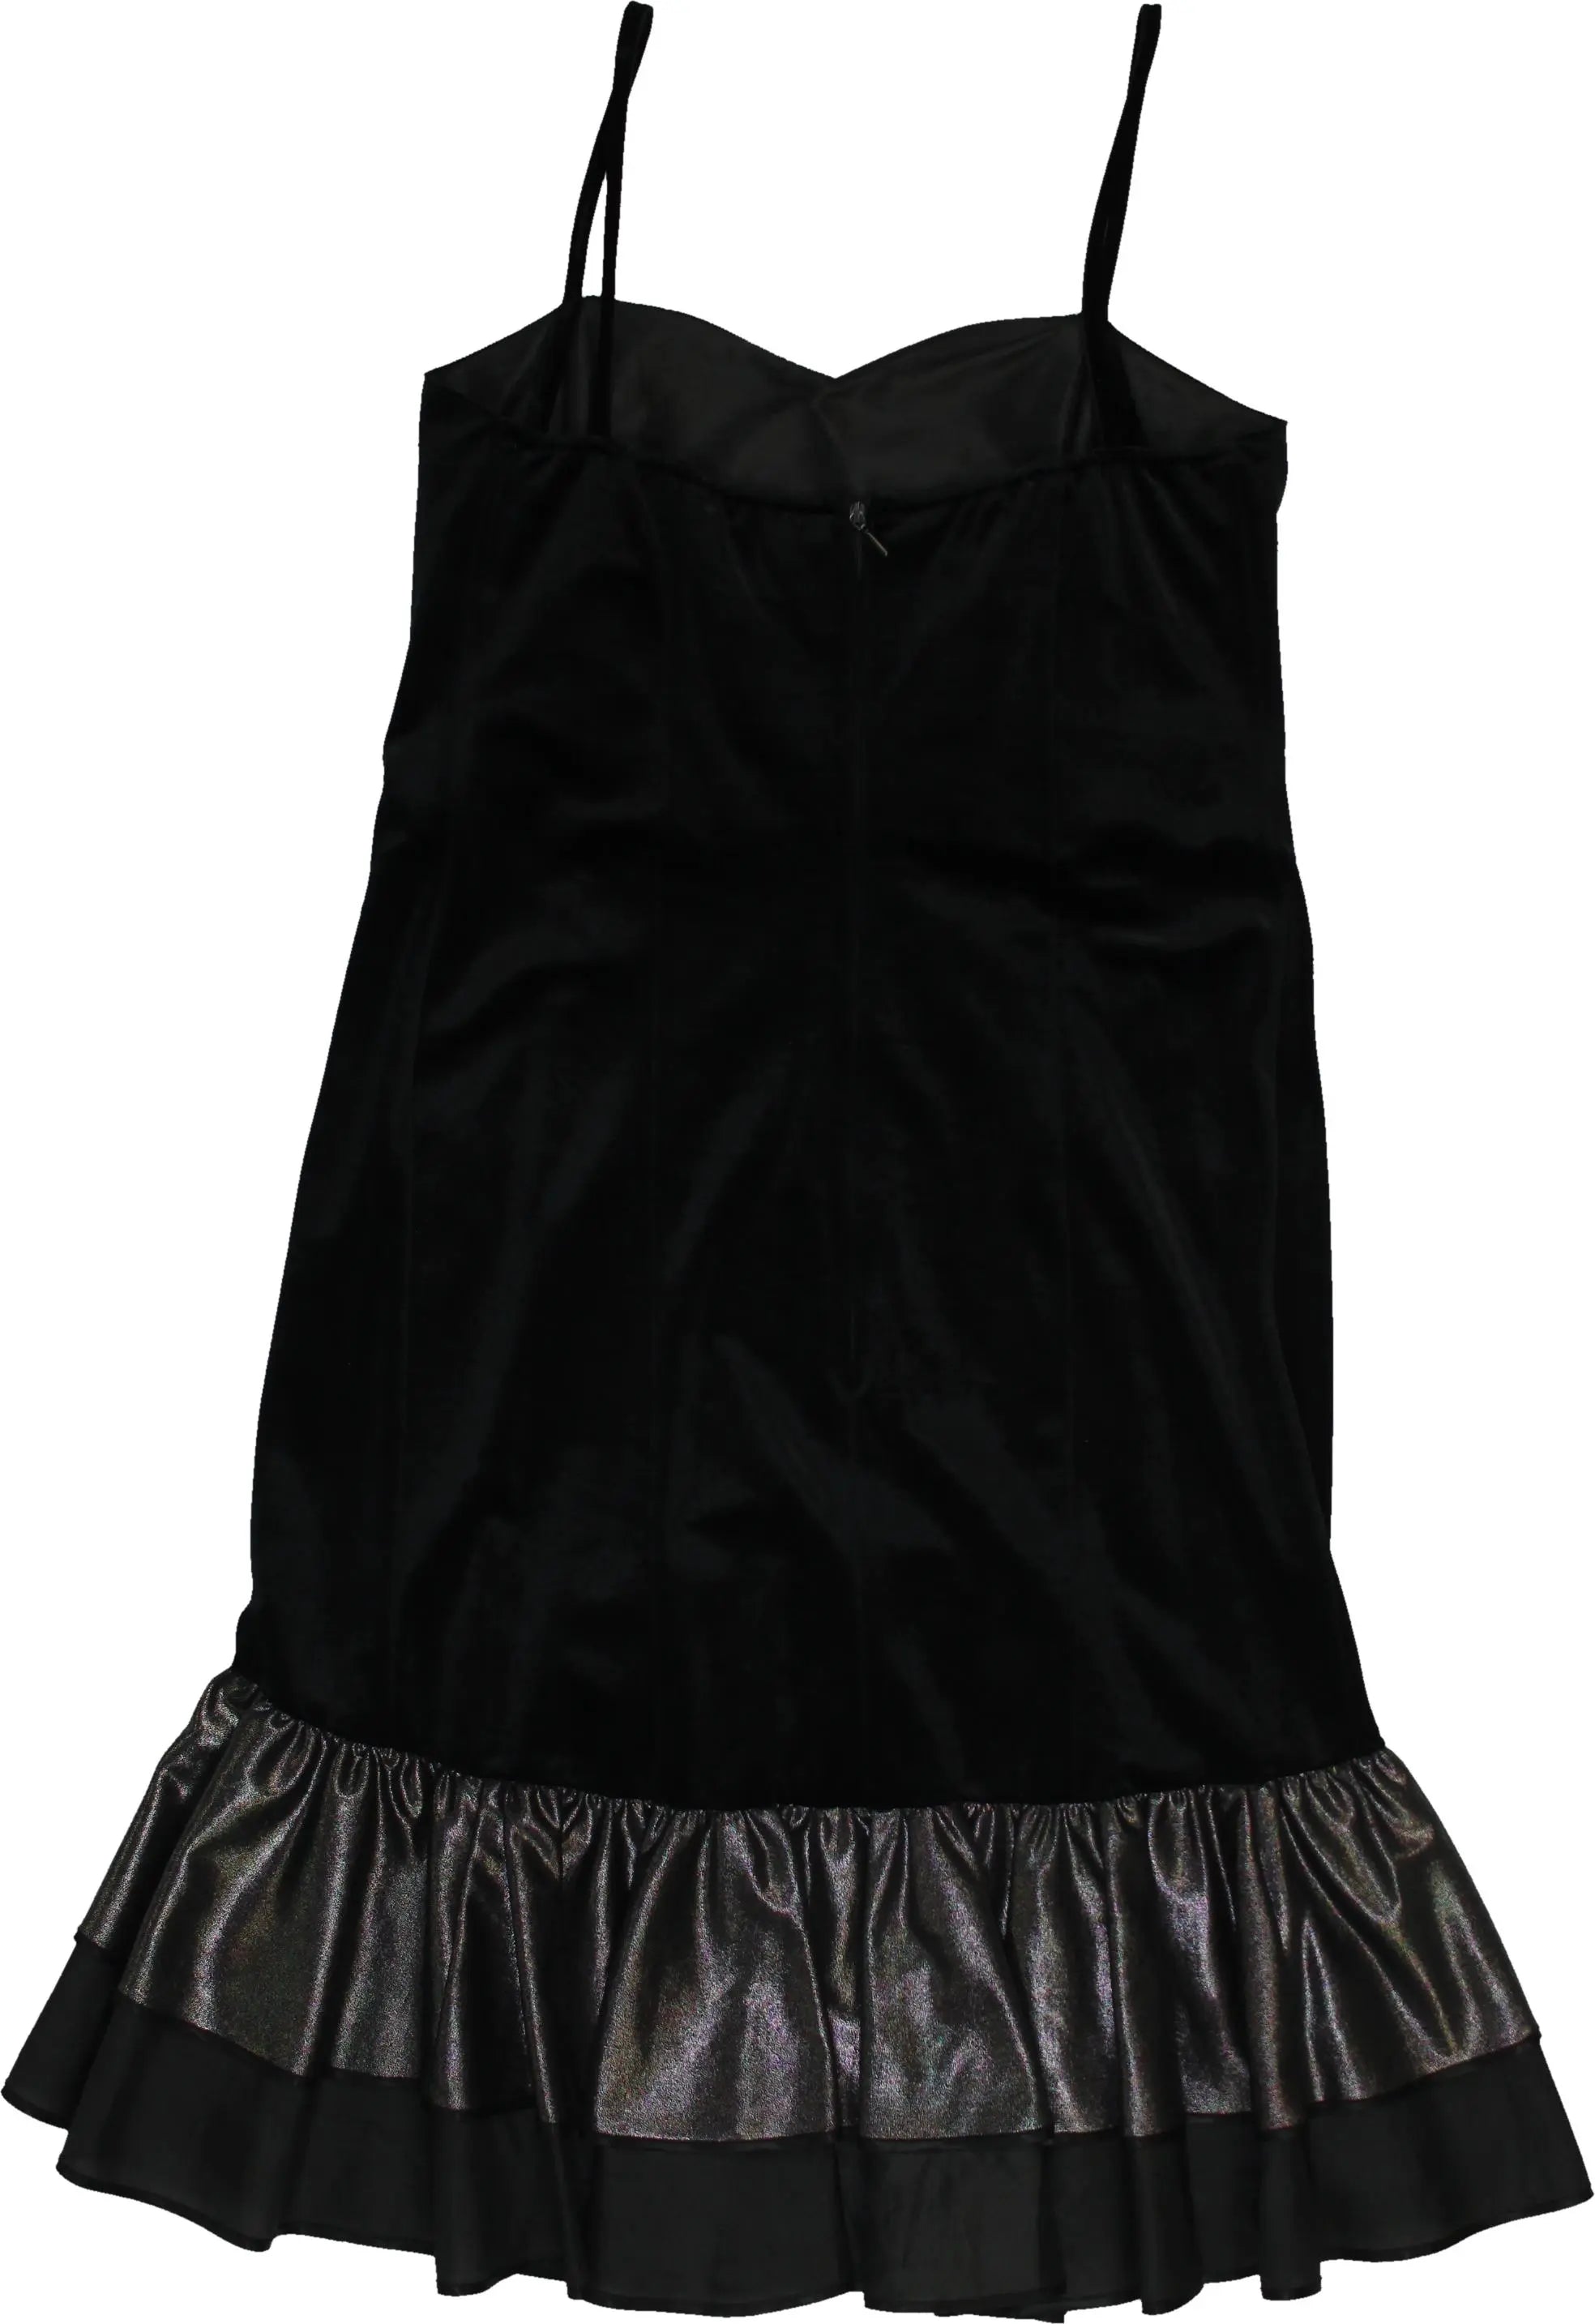 Le Kress - 80s Black Velvet Party Dress- ThriftTale.com - Vintage and second handclothing